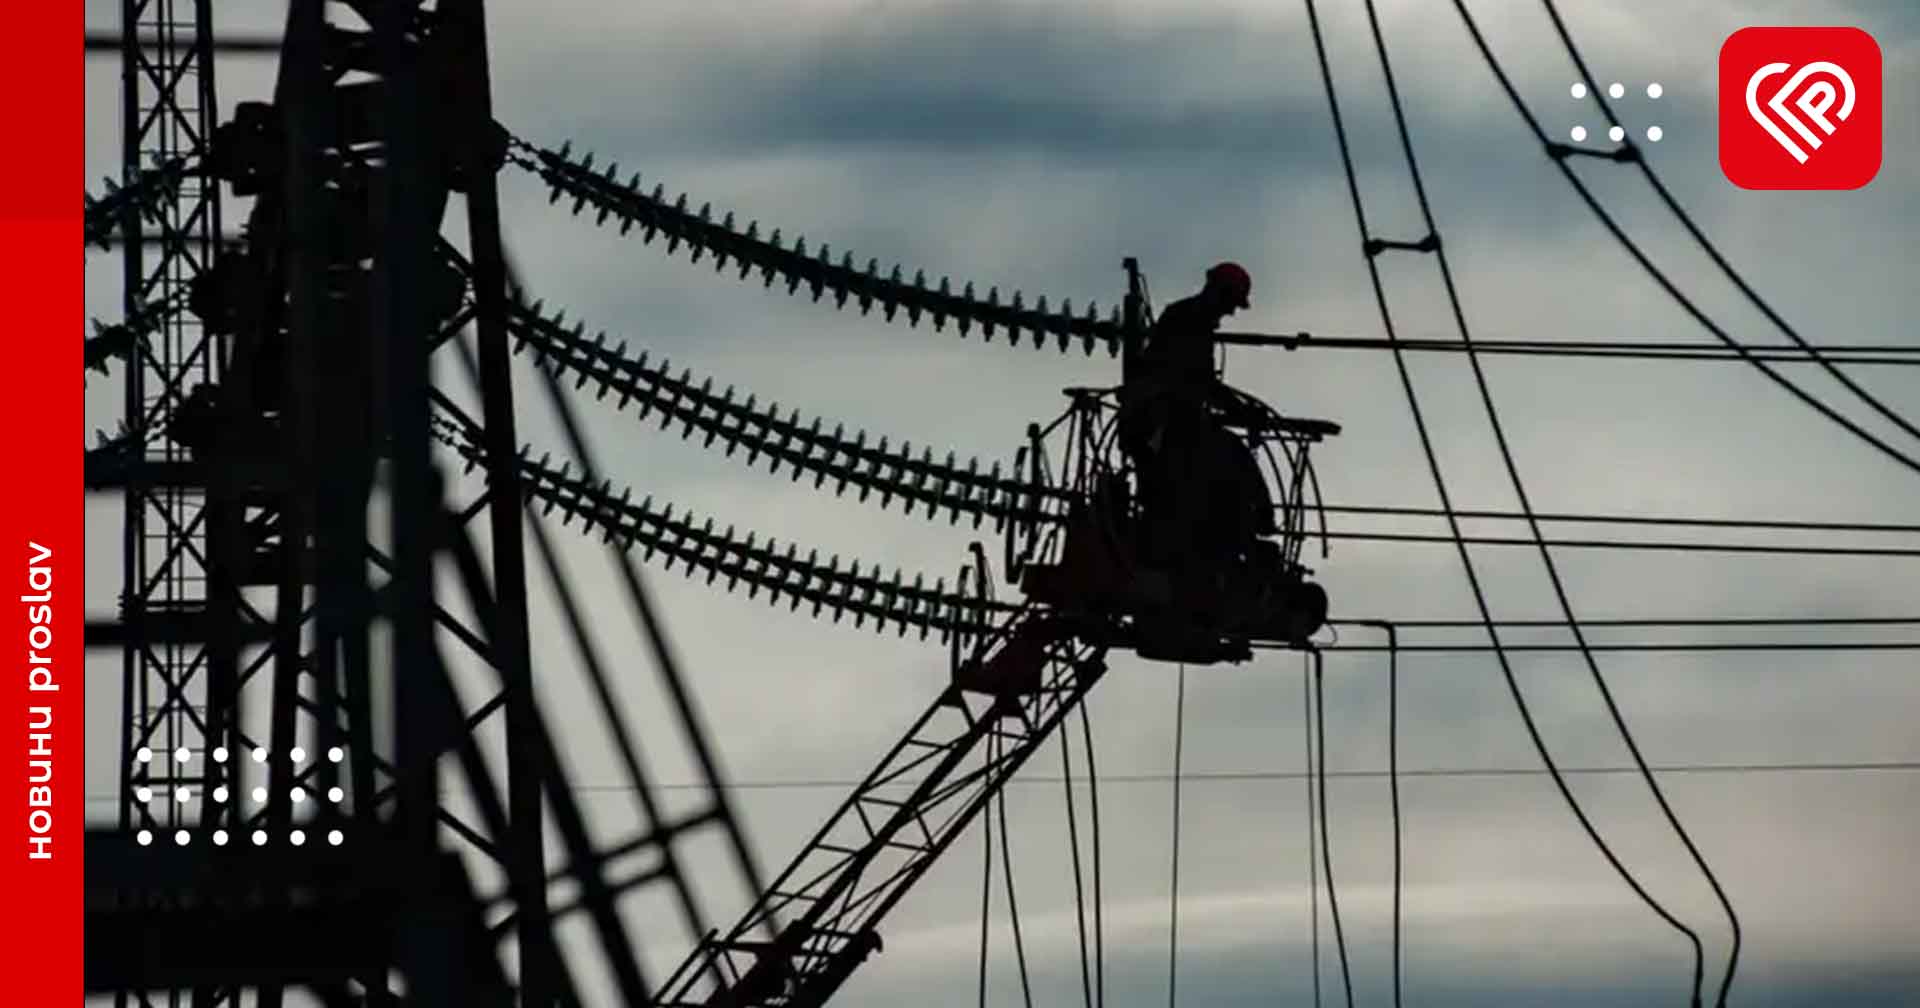 Через негоду на Київщині енергетики переходять в посилений режим роботи – ДТЕК